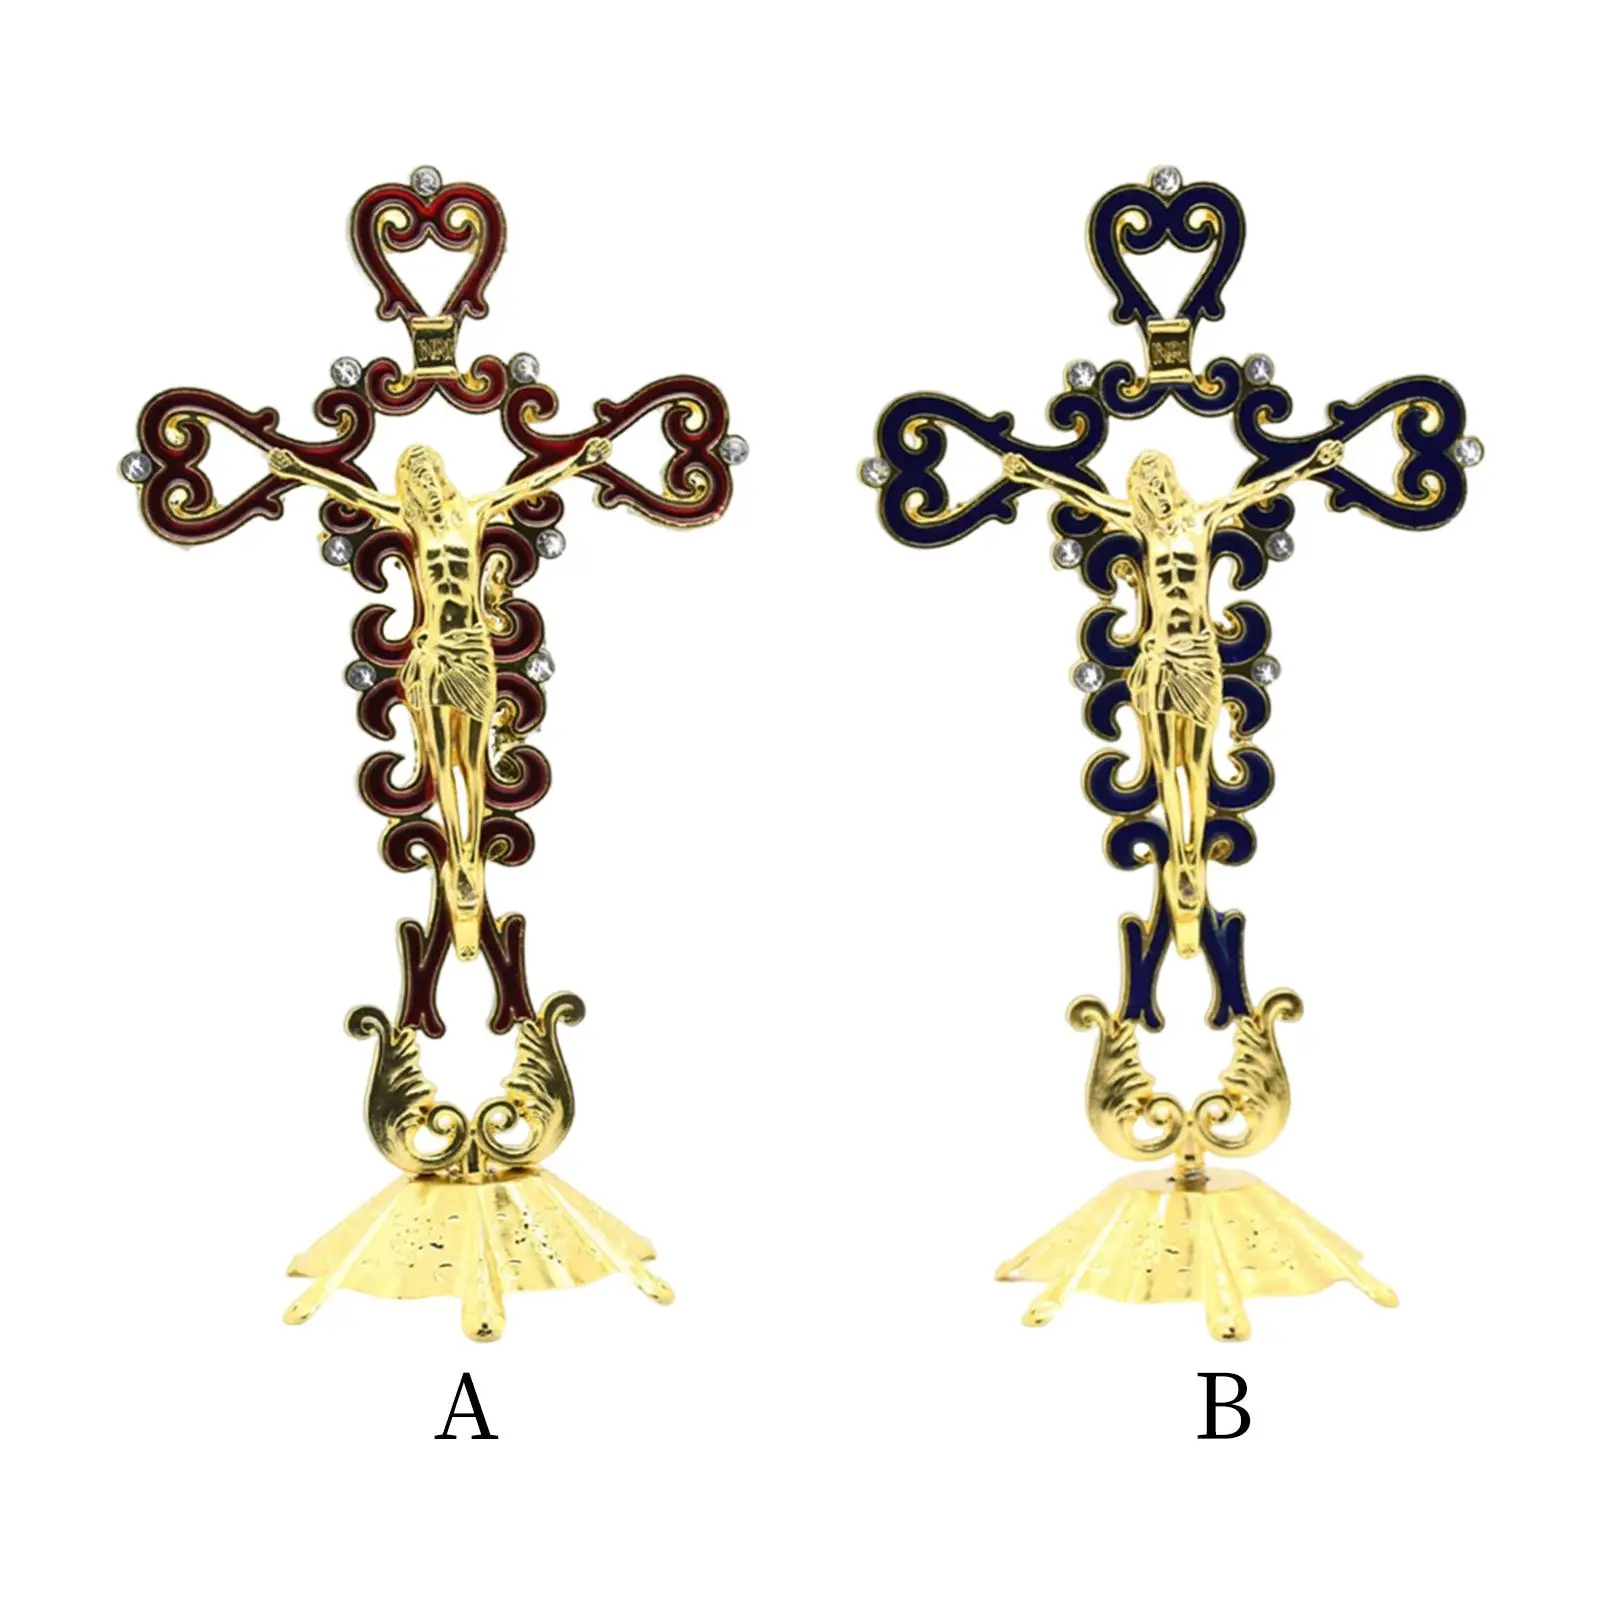 Religious Crucifix Figurine Jesus Cross Statue Ornament Crafts Sculpture Home Chapel Office Decor